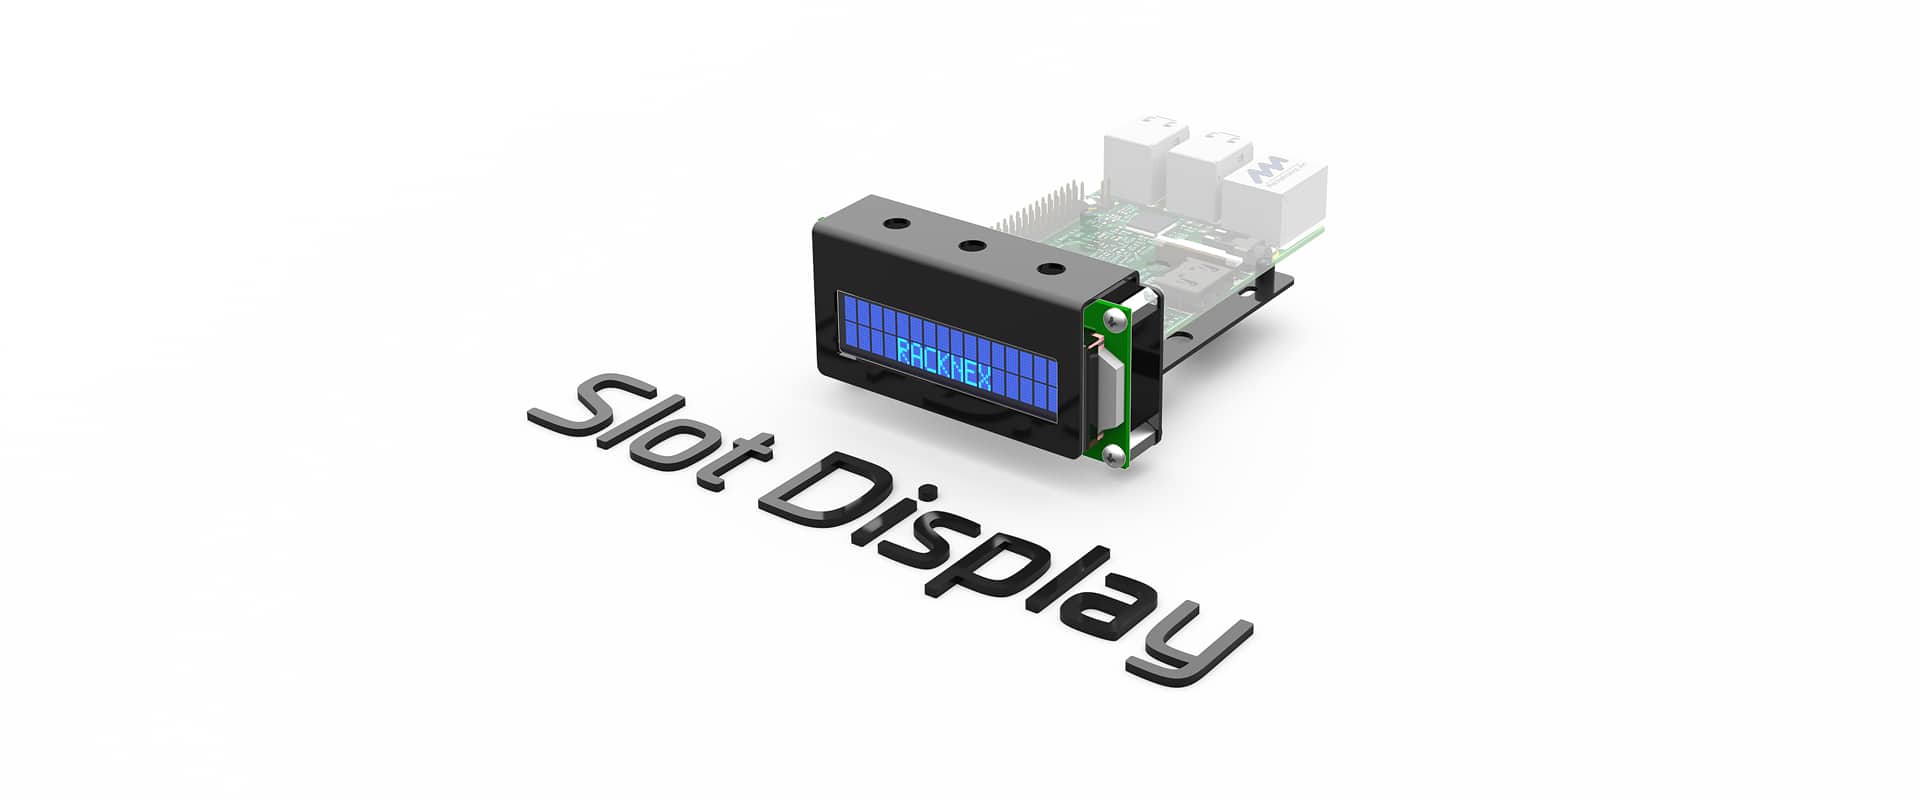 16×2 LCD Slot Displaywith Display JOY-IT: SBC-LCD16x2